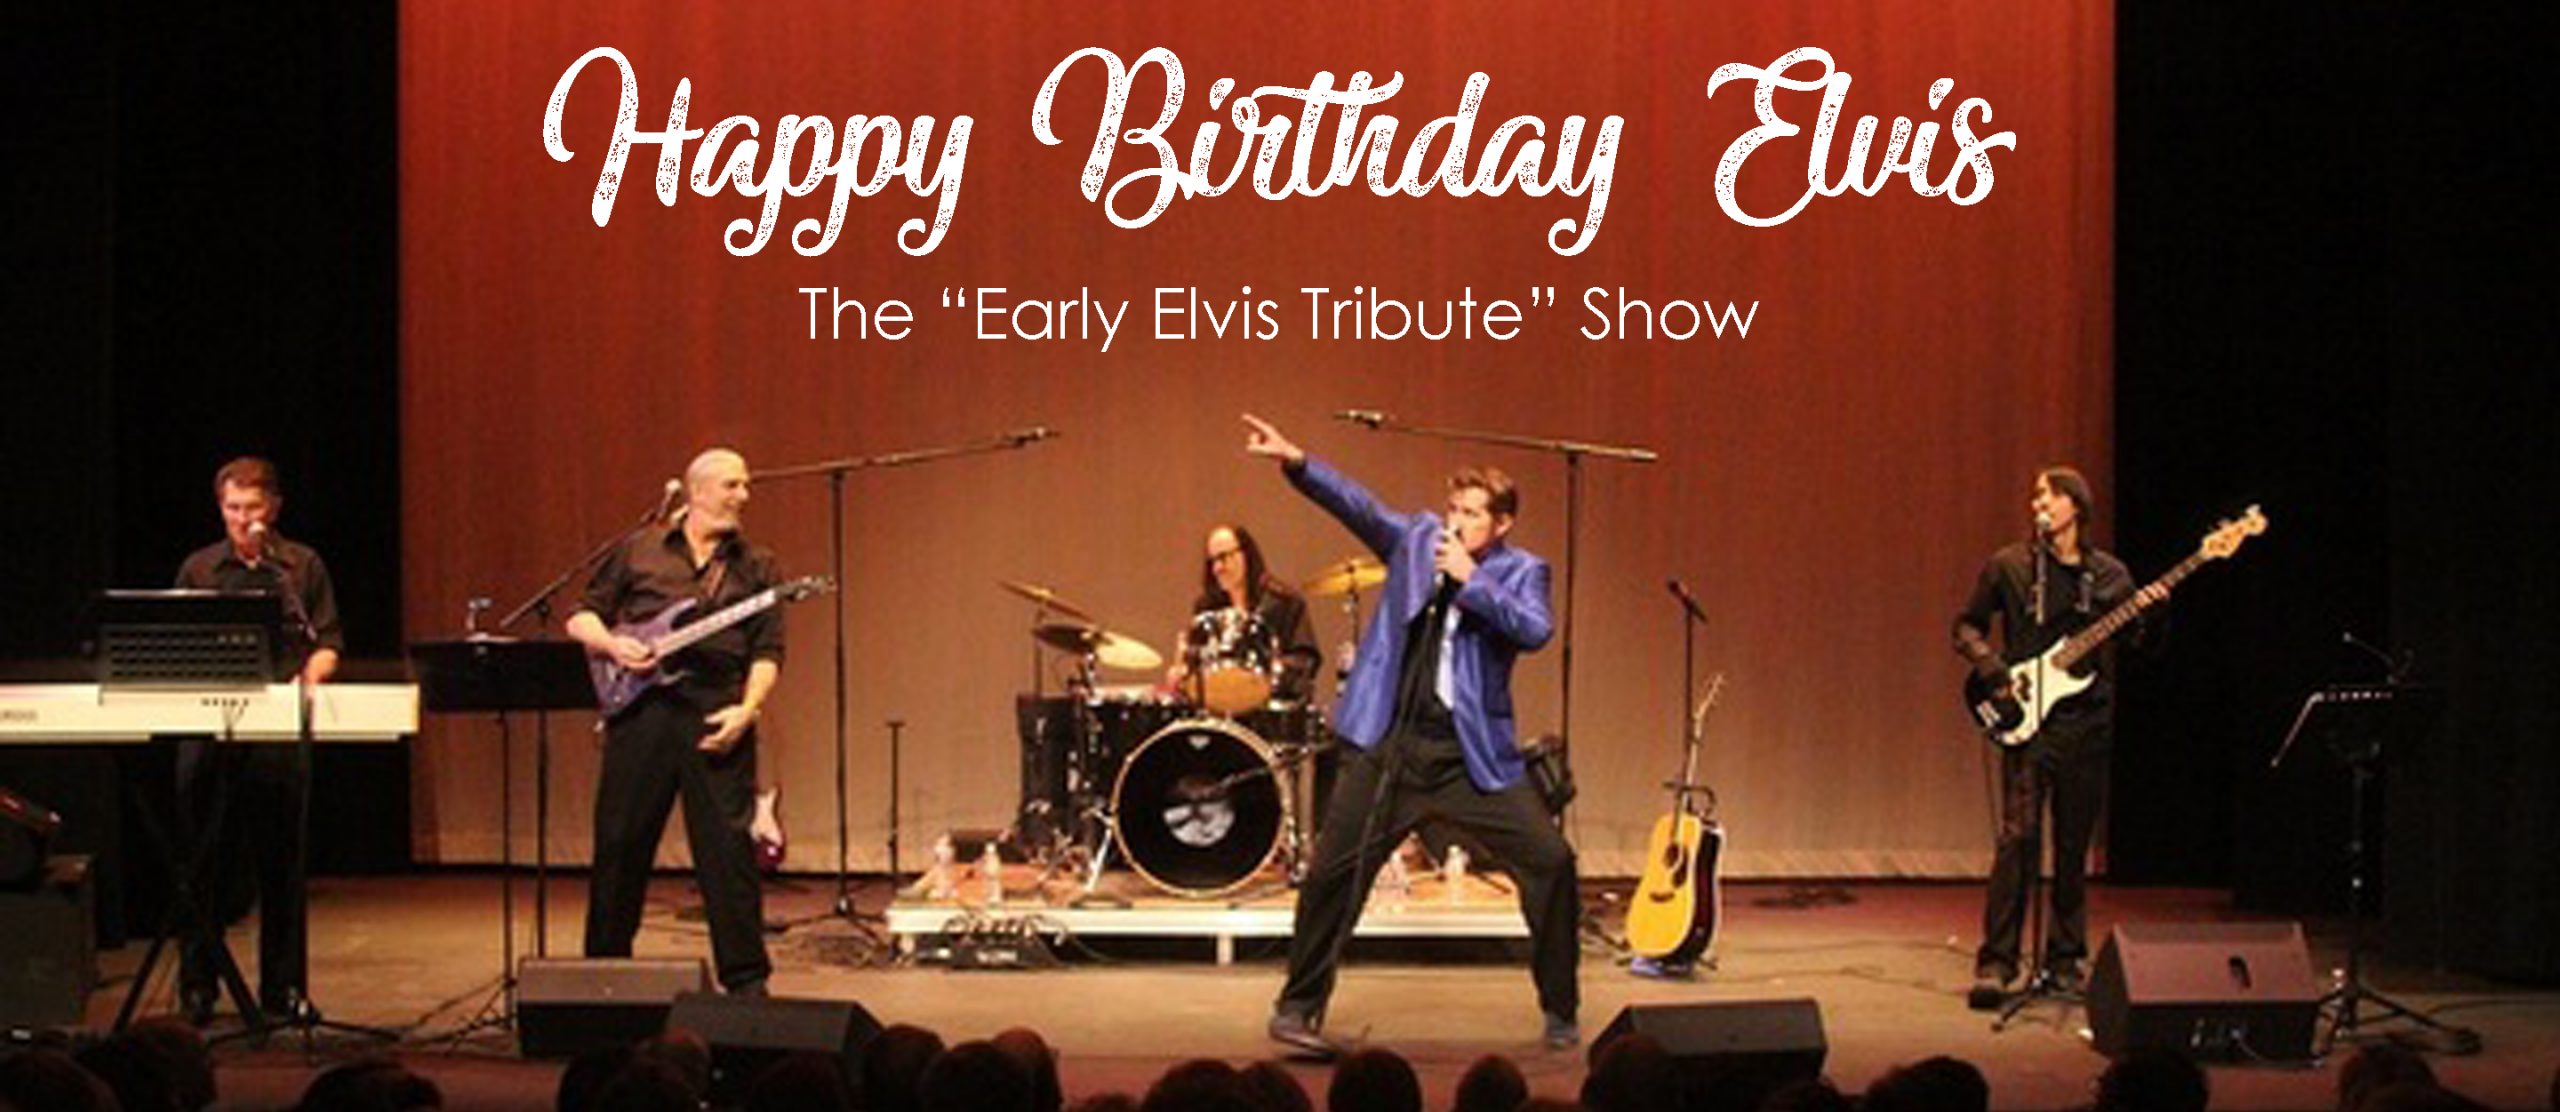 Happy Birthday, Elvis! The "Early Elvis Tribute" Show